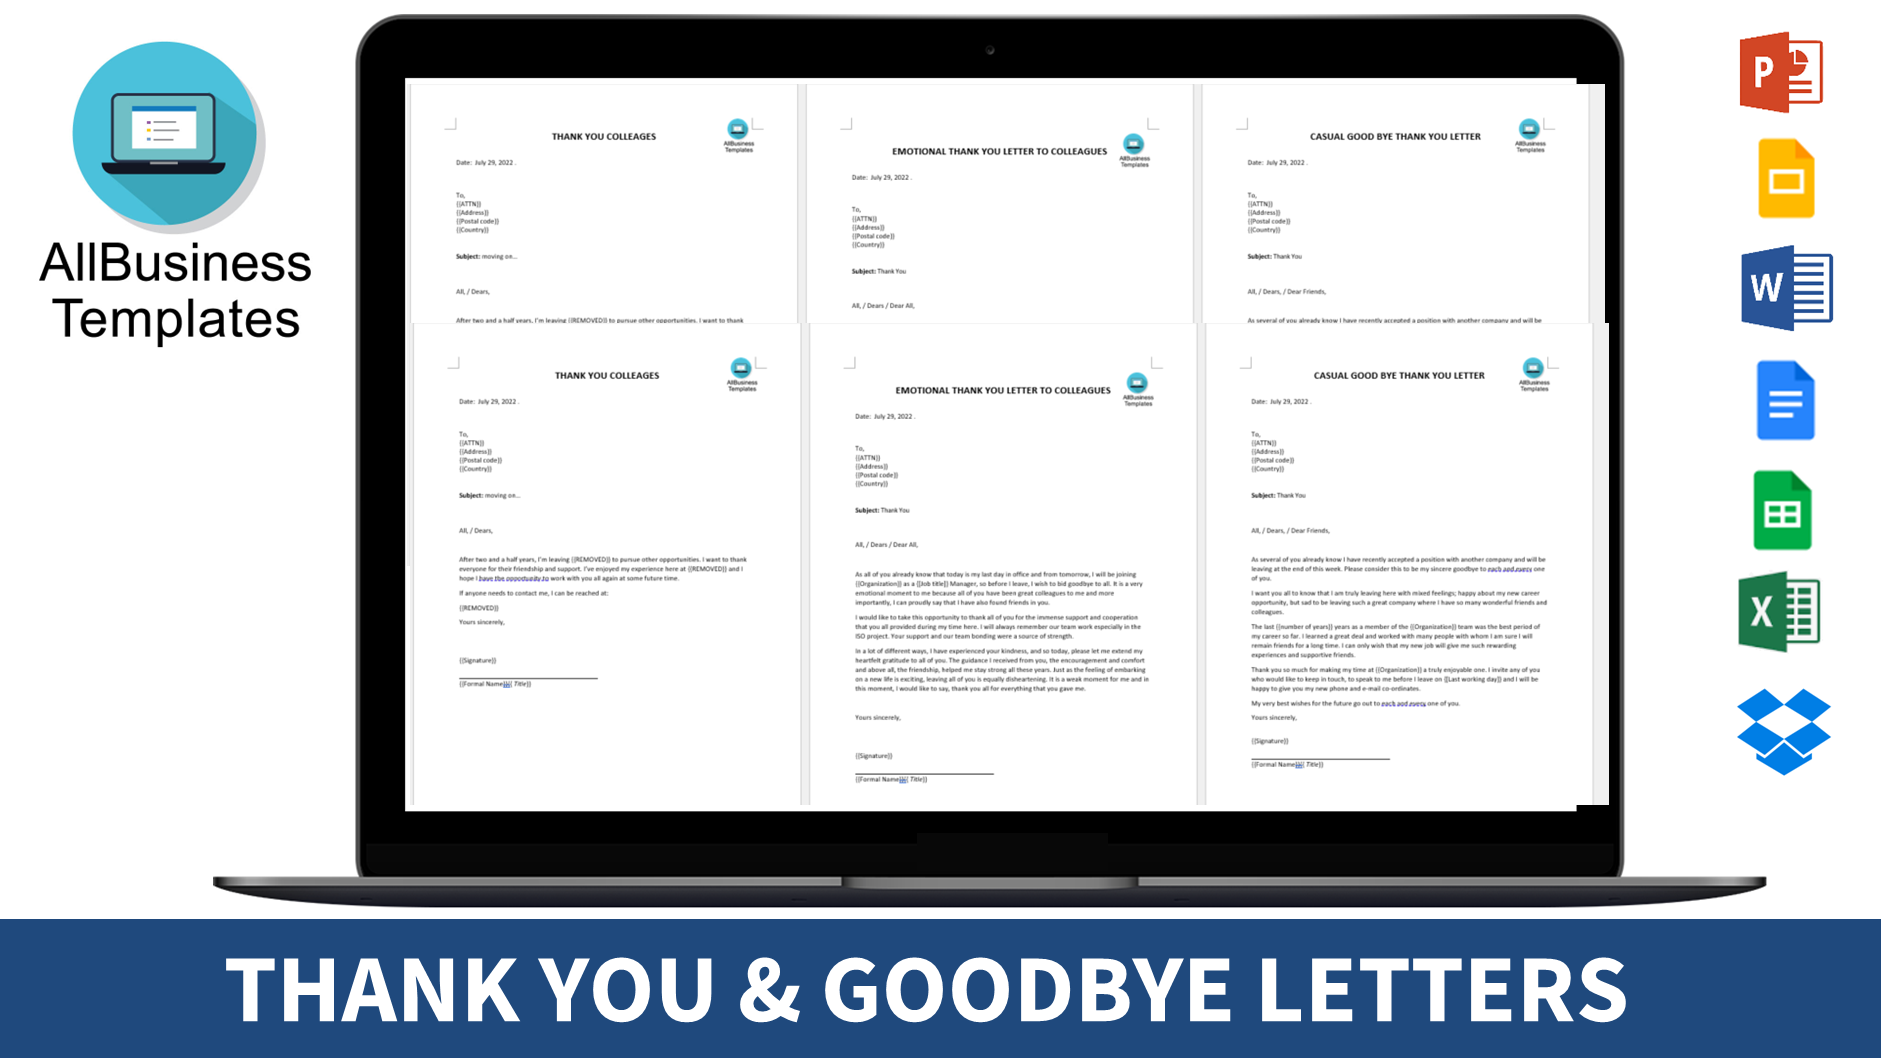 casual goodbye letter to coworkers plantilla imagen principal